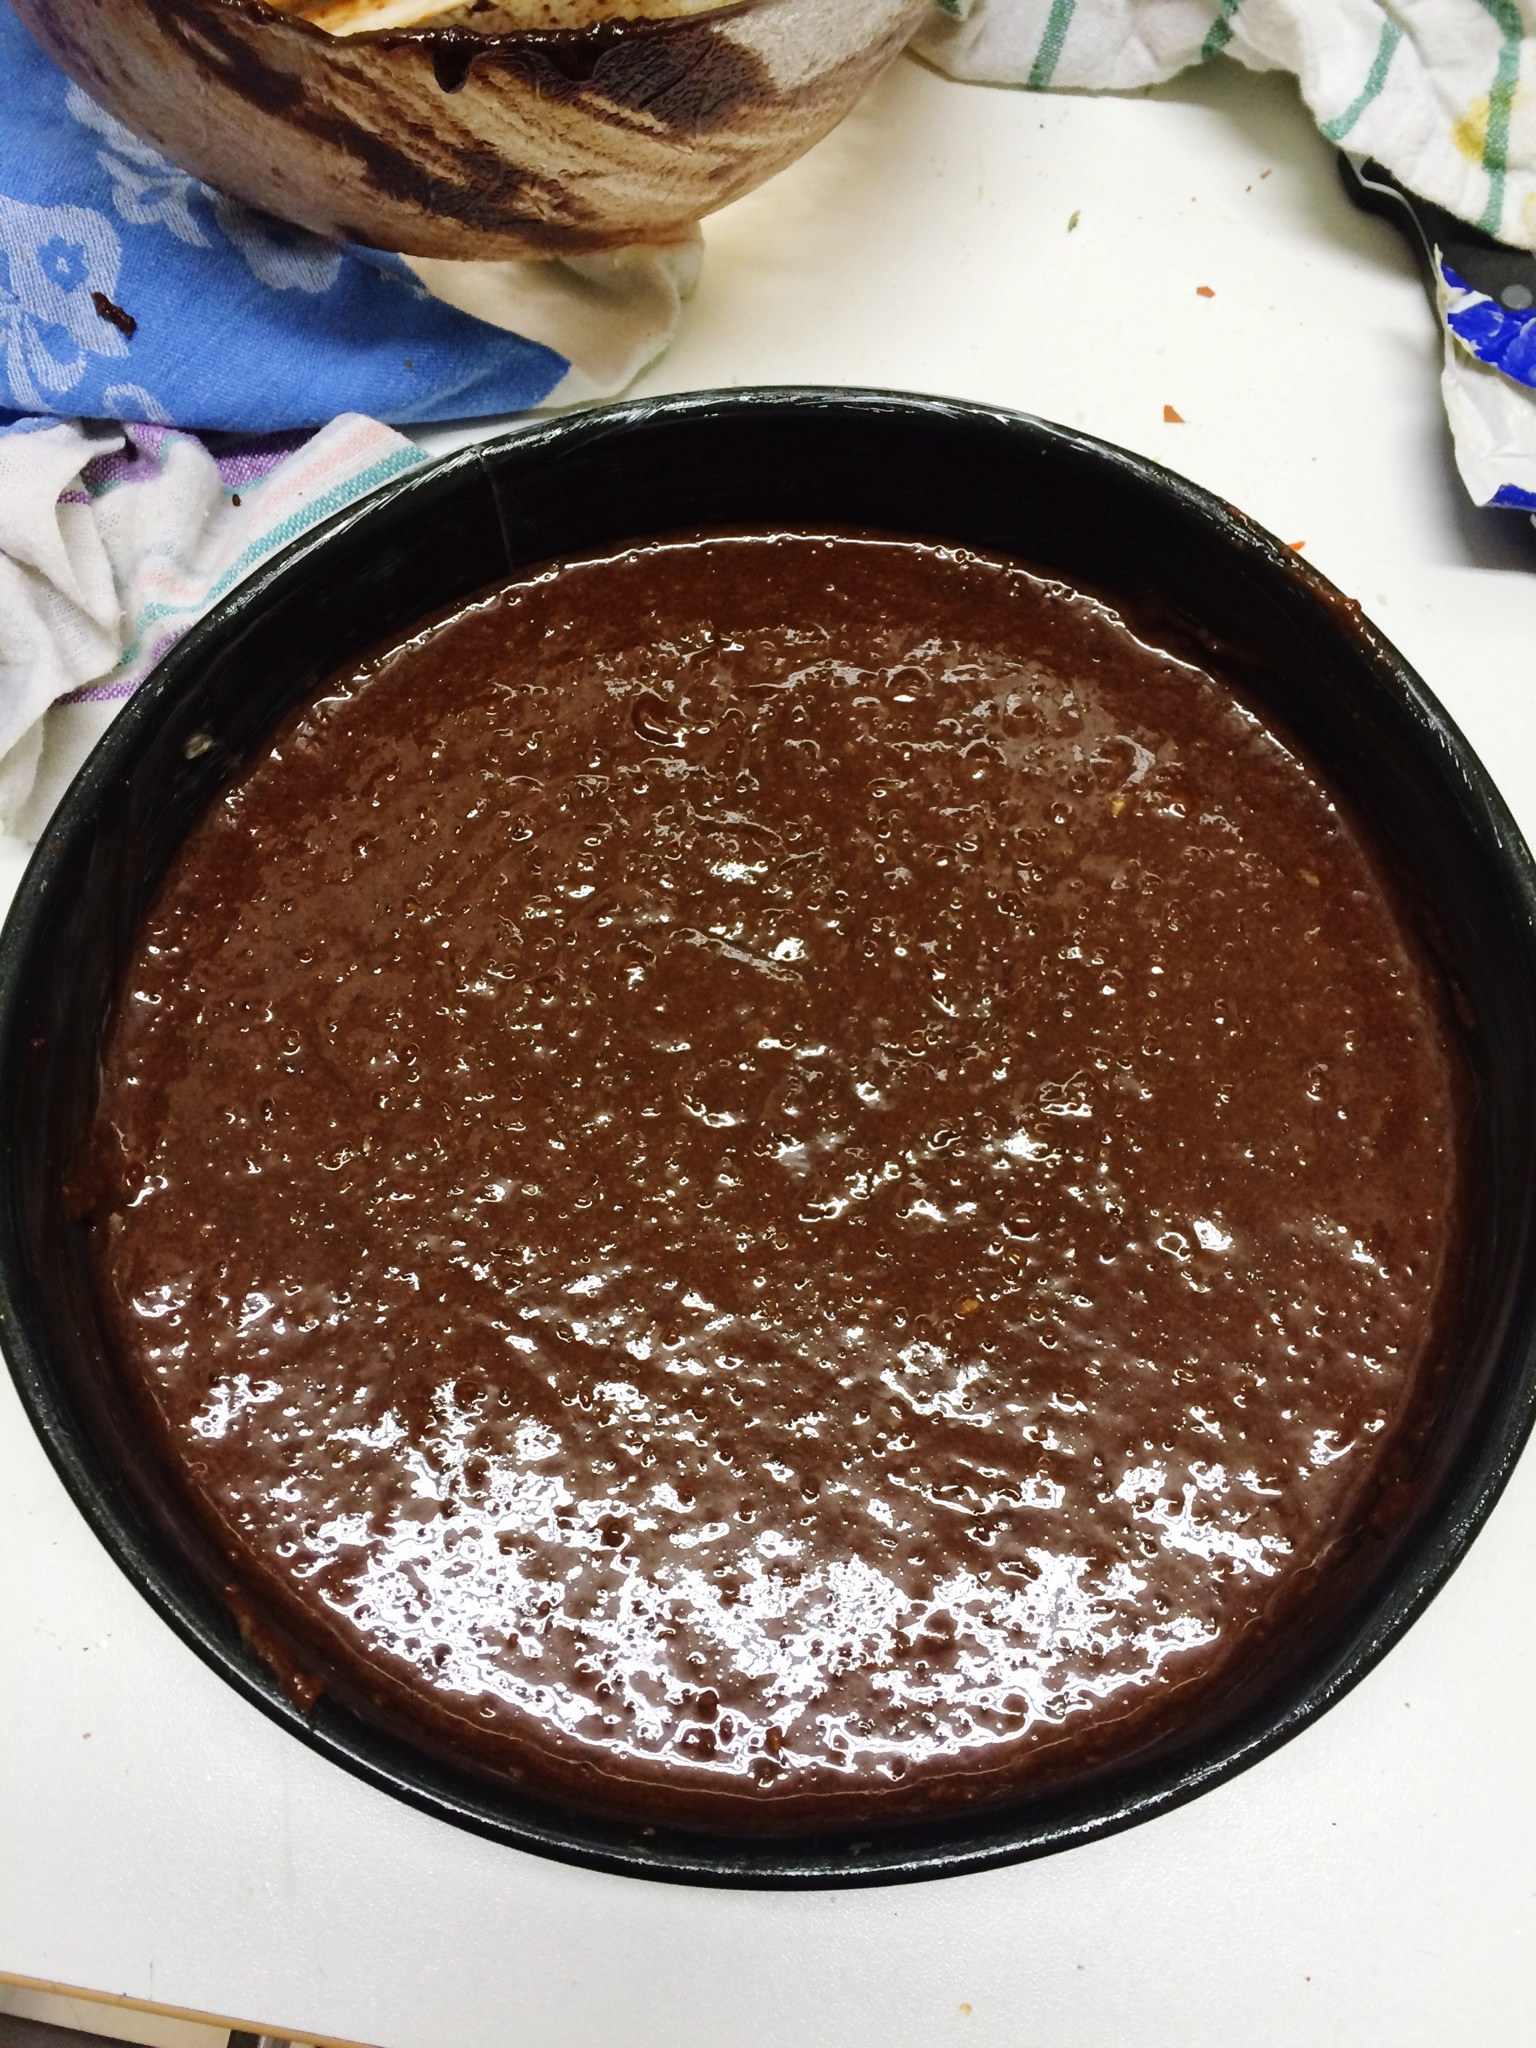 Chocolate cake batter.